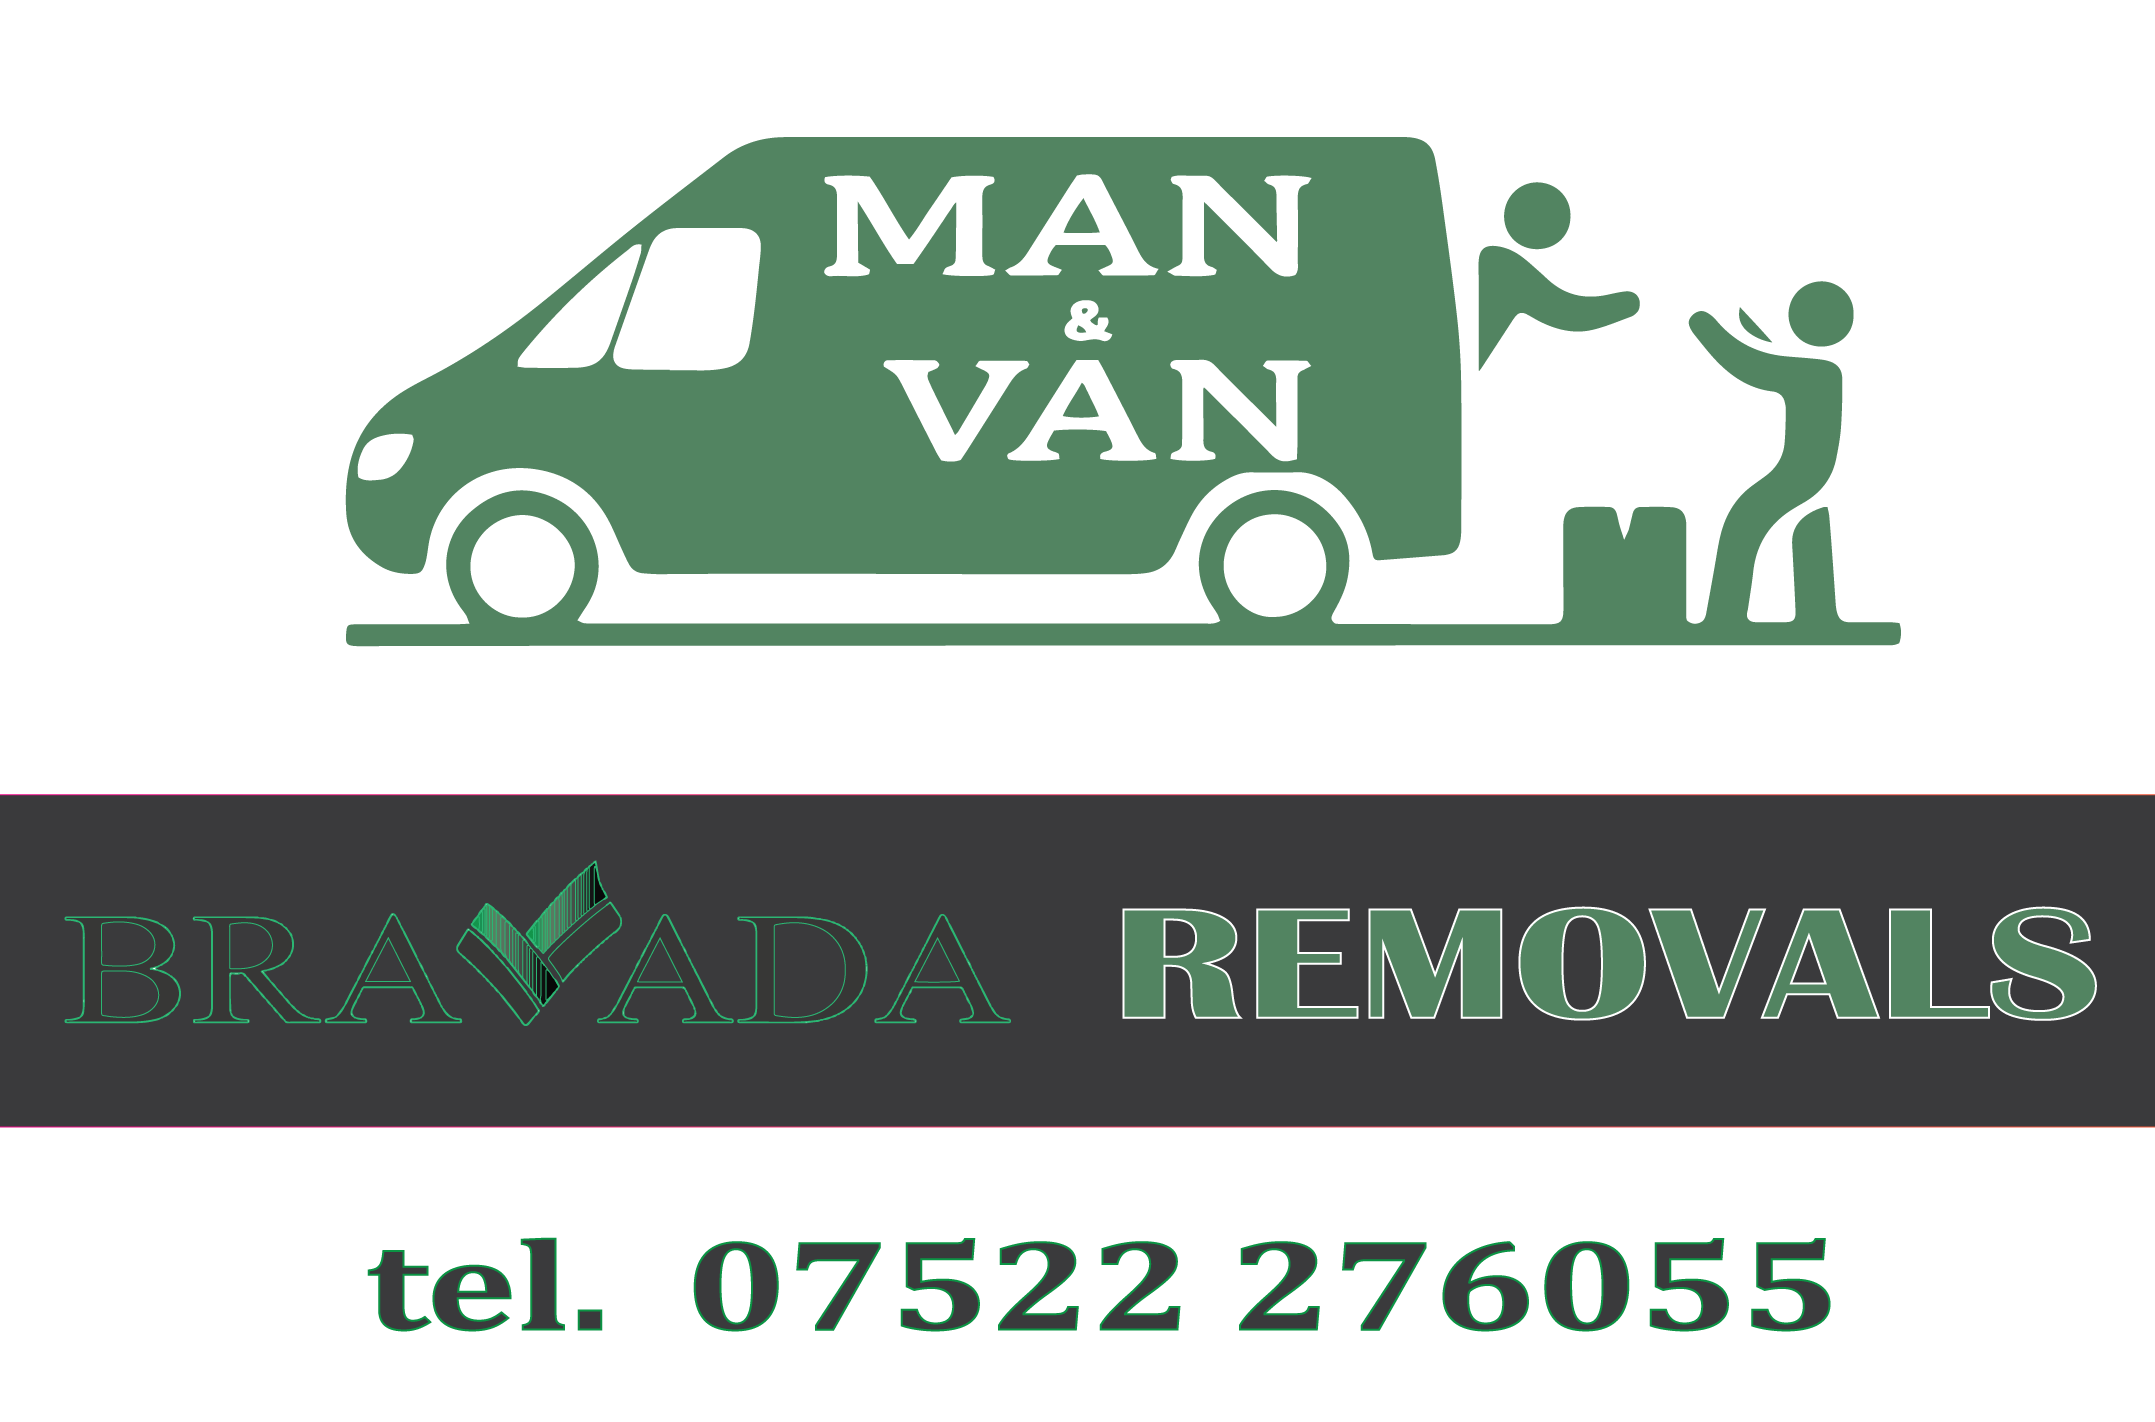 Logo of Bravada Removals Removals And Storage - Household In Aberdeen, Aberdeenshire